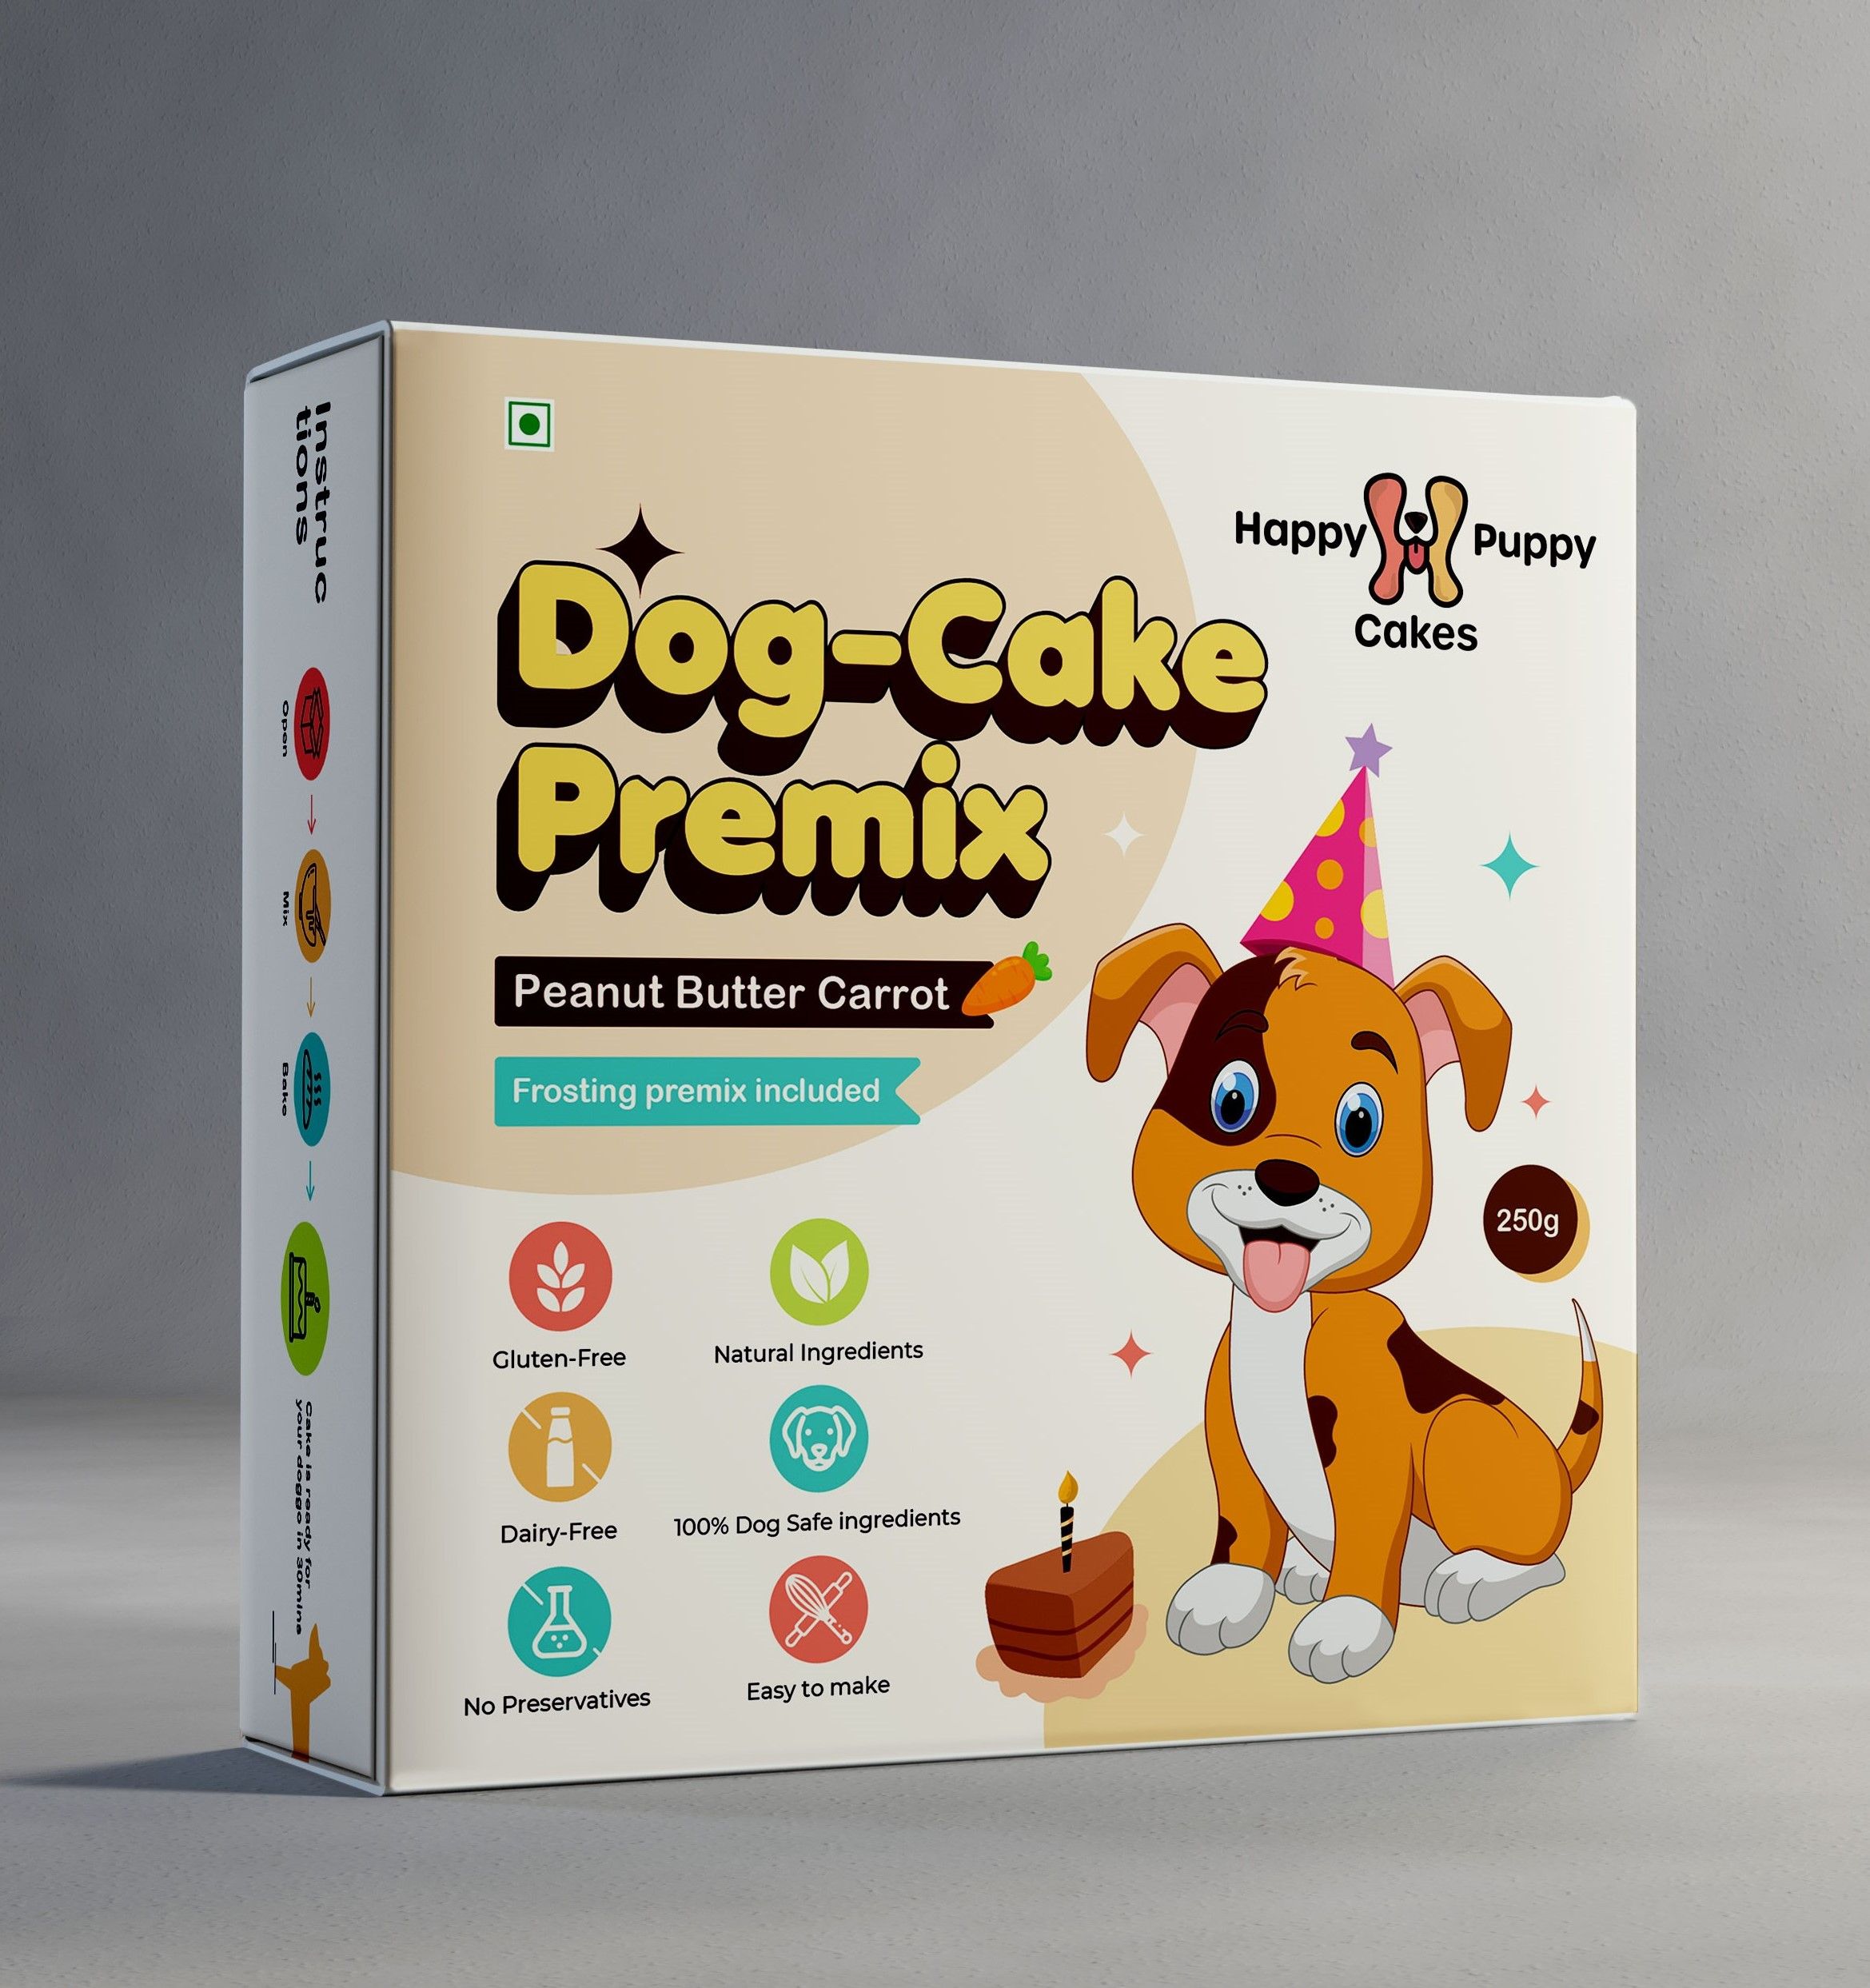 Buy Peanut Butter Carrot Dog Cake PREMIX (VEG) India - Order online from Happy  Puppy Cakes - Dog Cakes near me in Delhi, Bangalore, Mumbai, Pune,  Hyderabad, Chennai, Haryana, Kolkata, Patna, Surat,